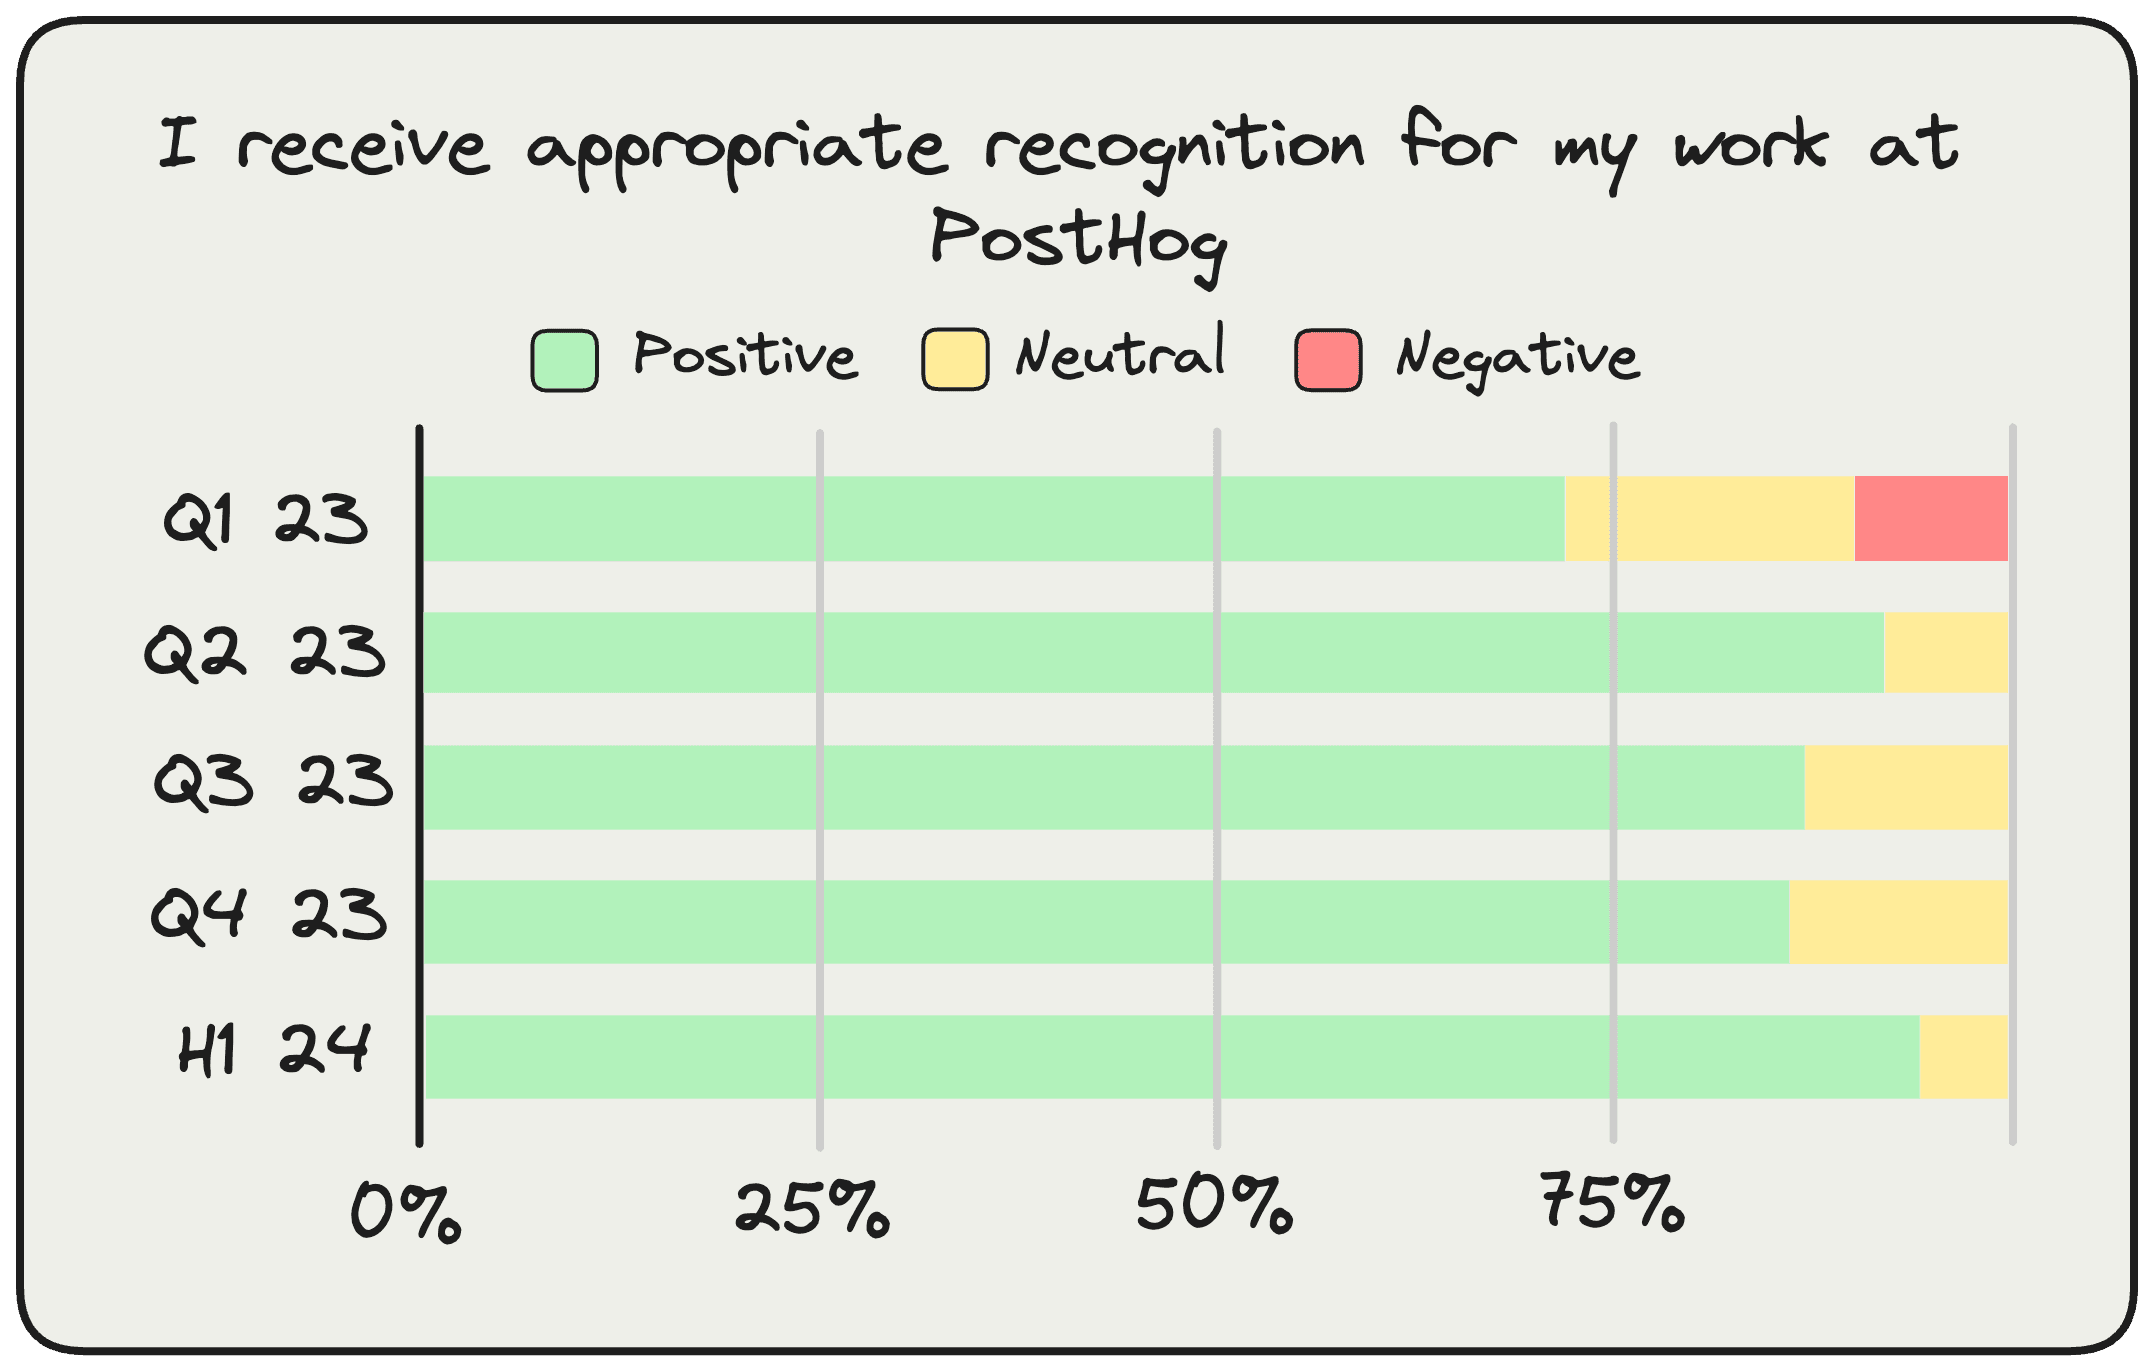 PostHog company survey